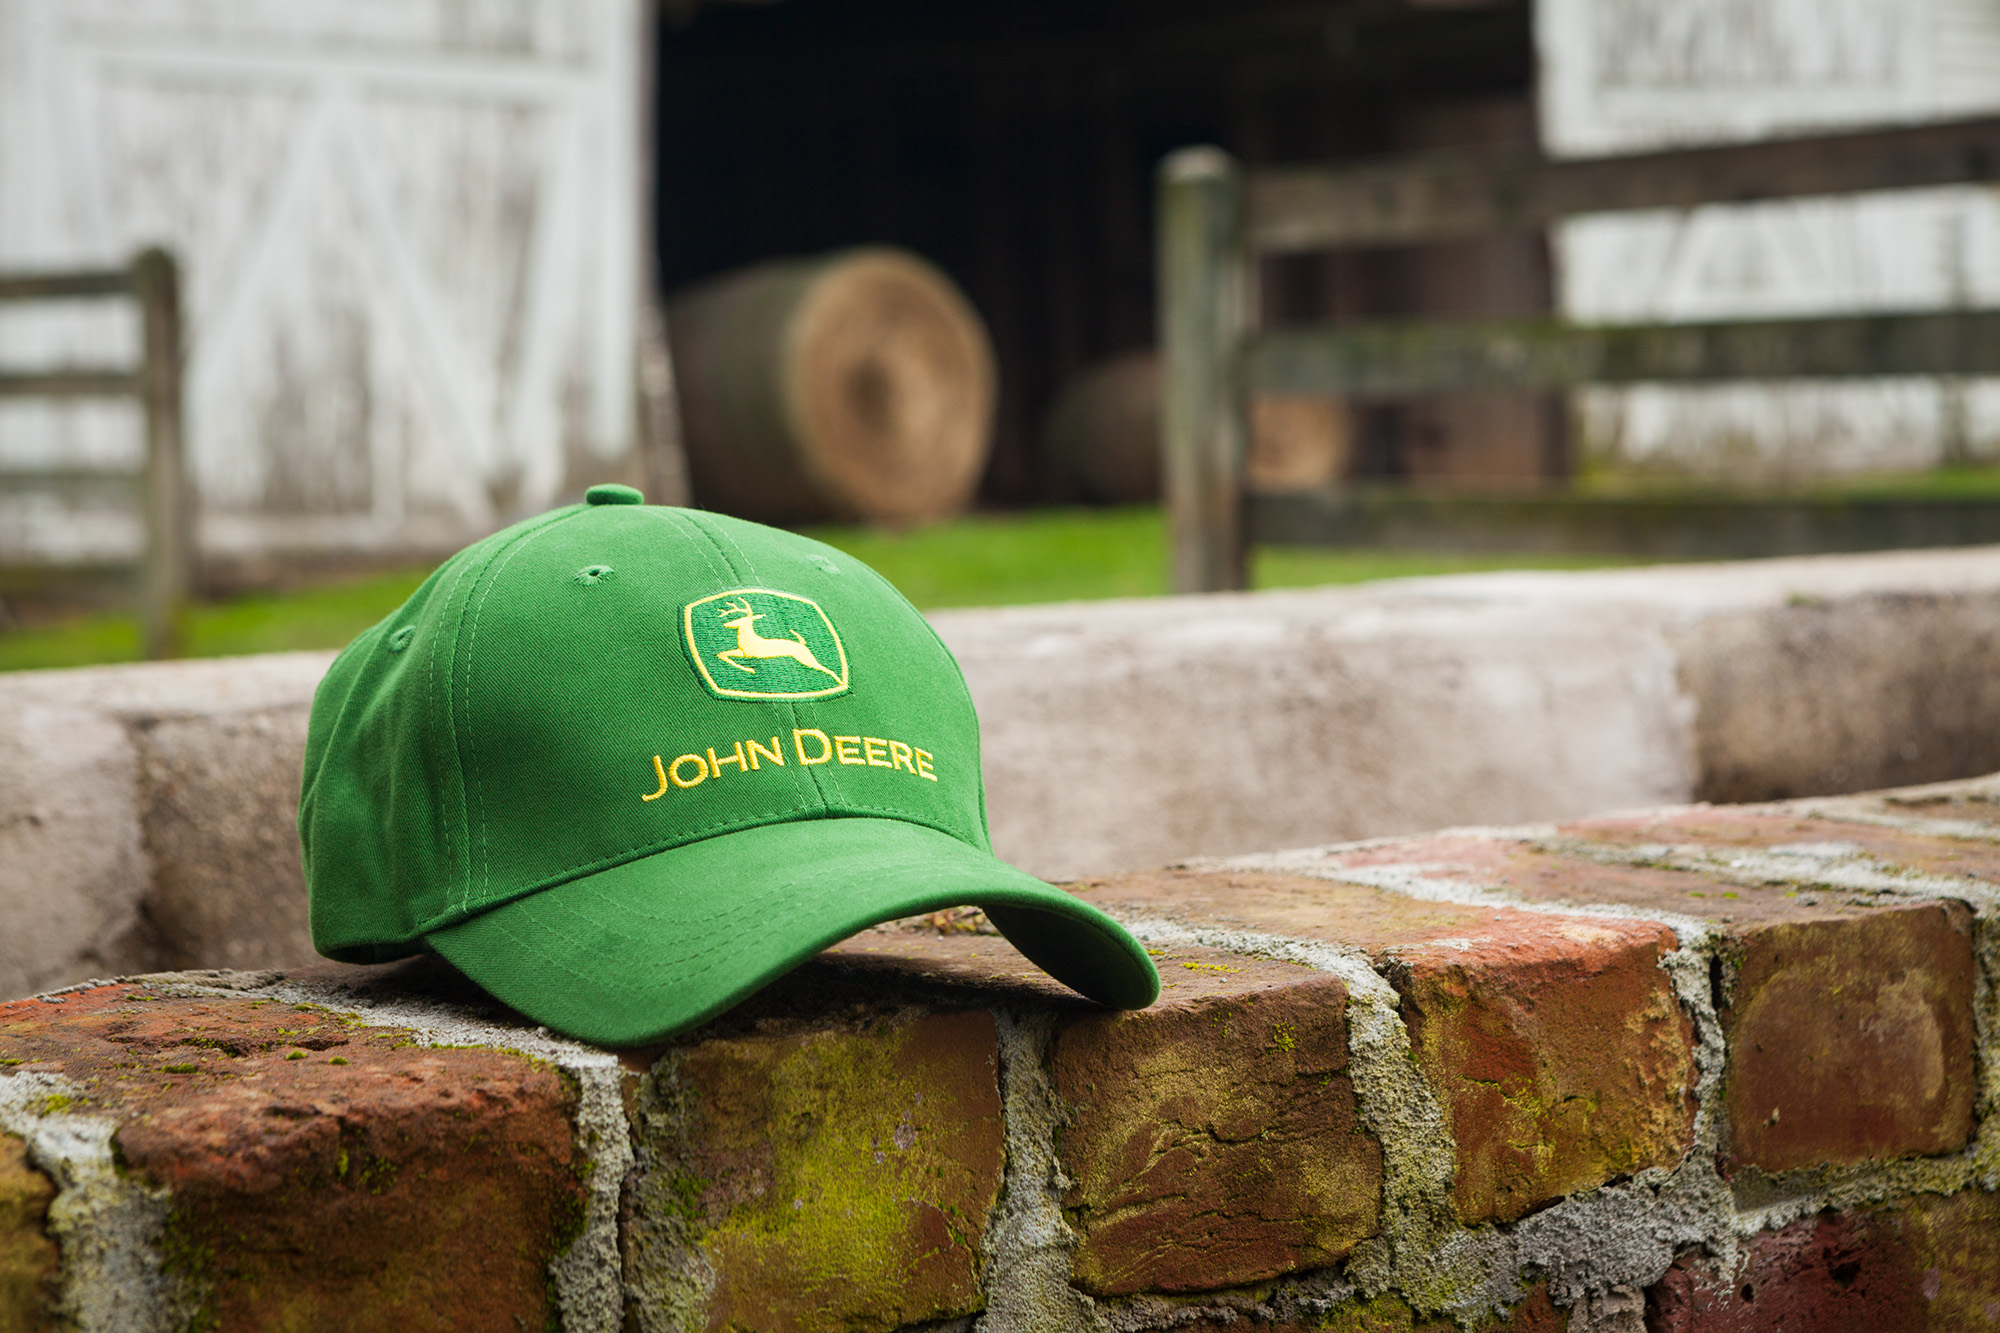 John Deere clothing, hats and merchandise